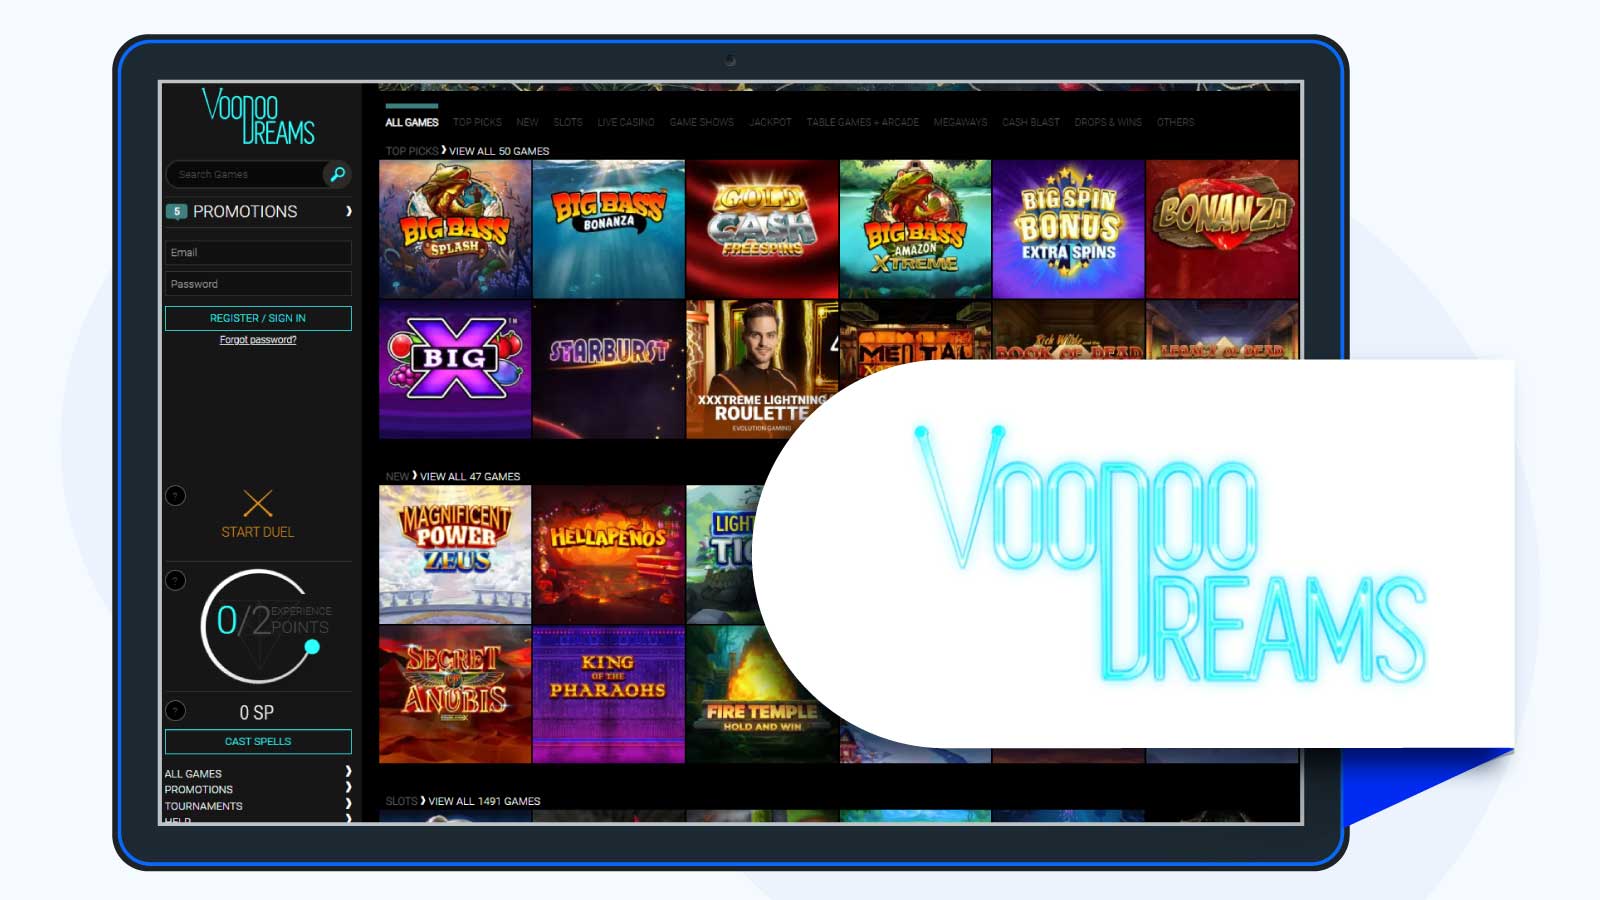 VoodooDreams Casino – Most Game Providers